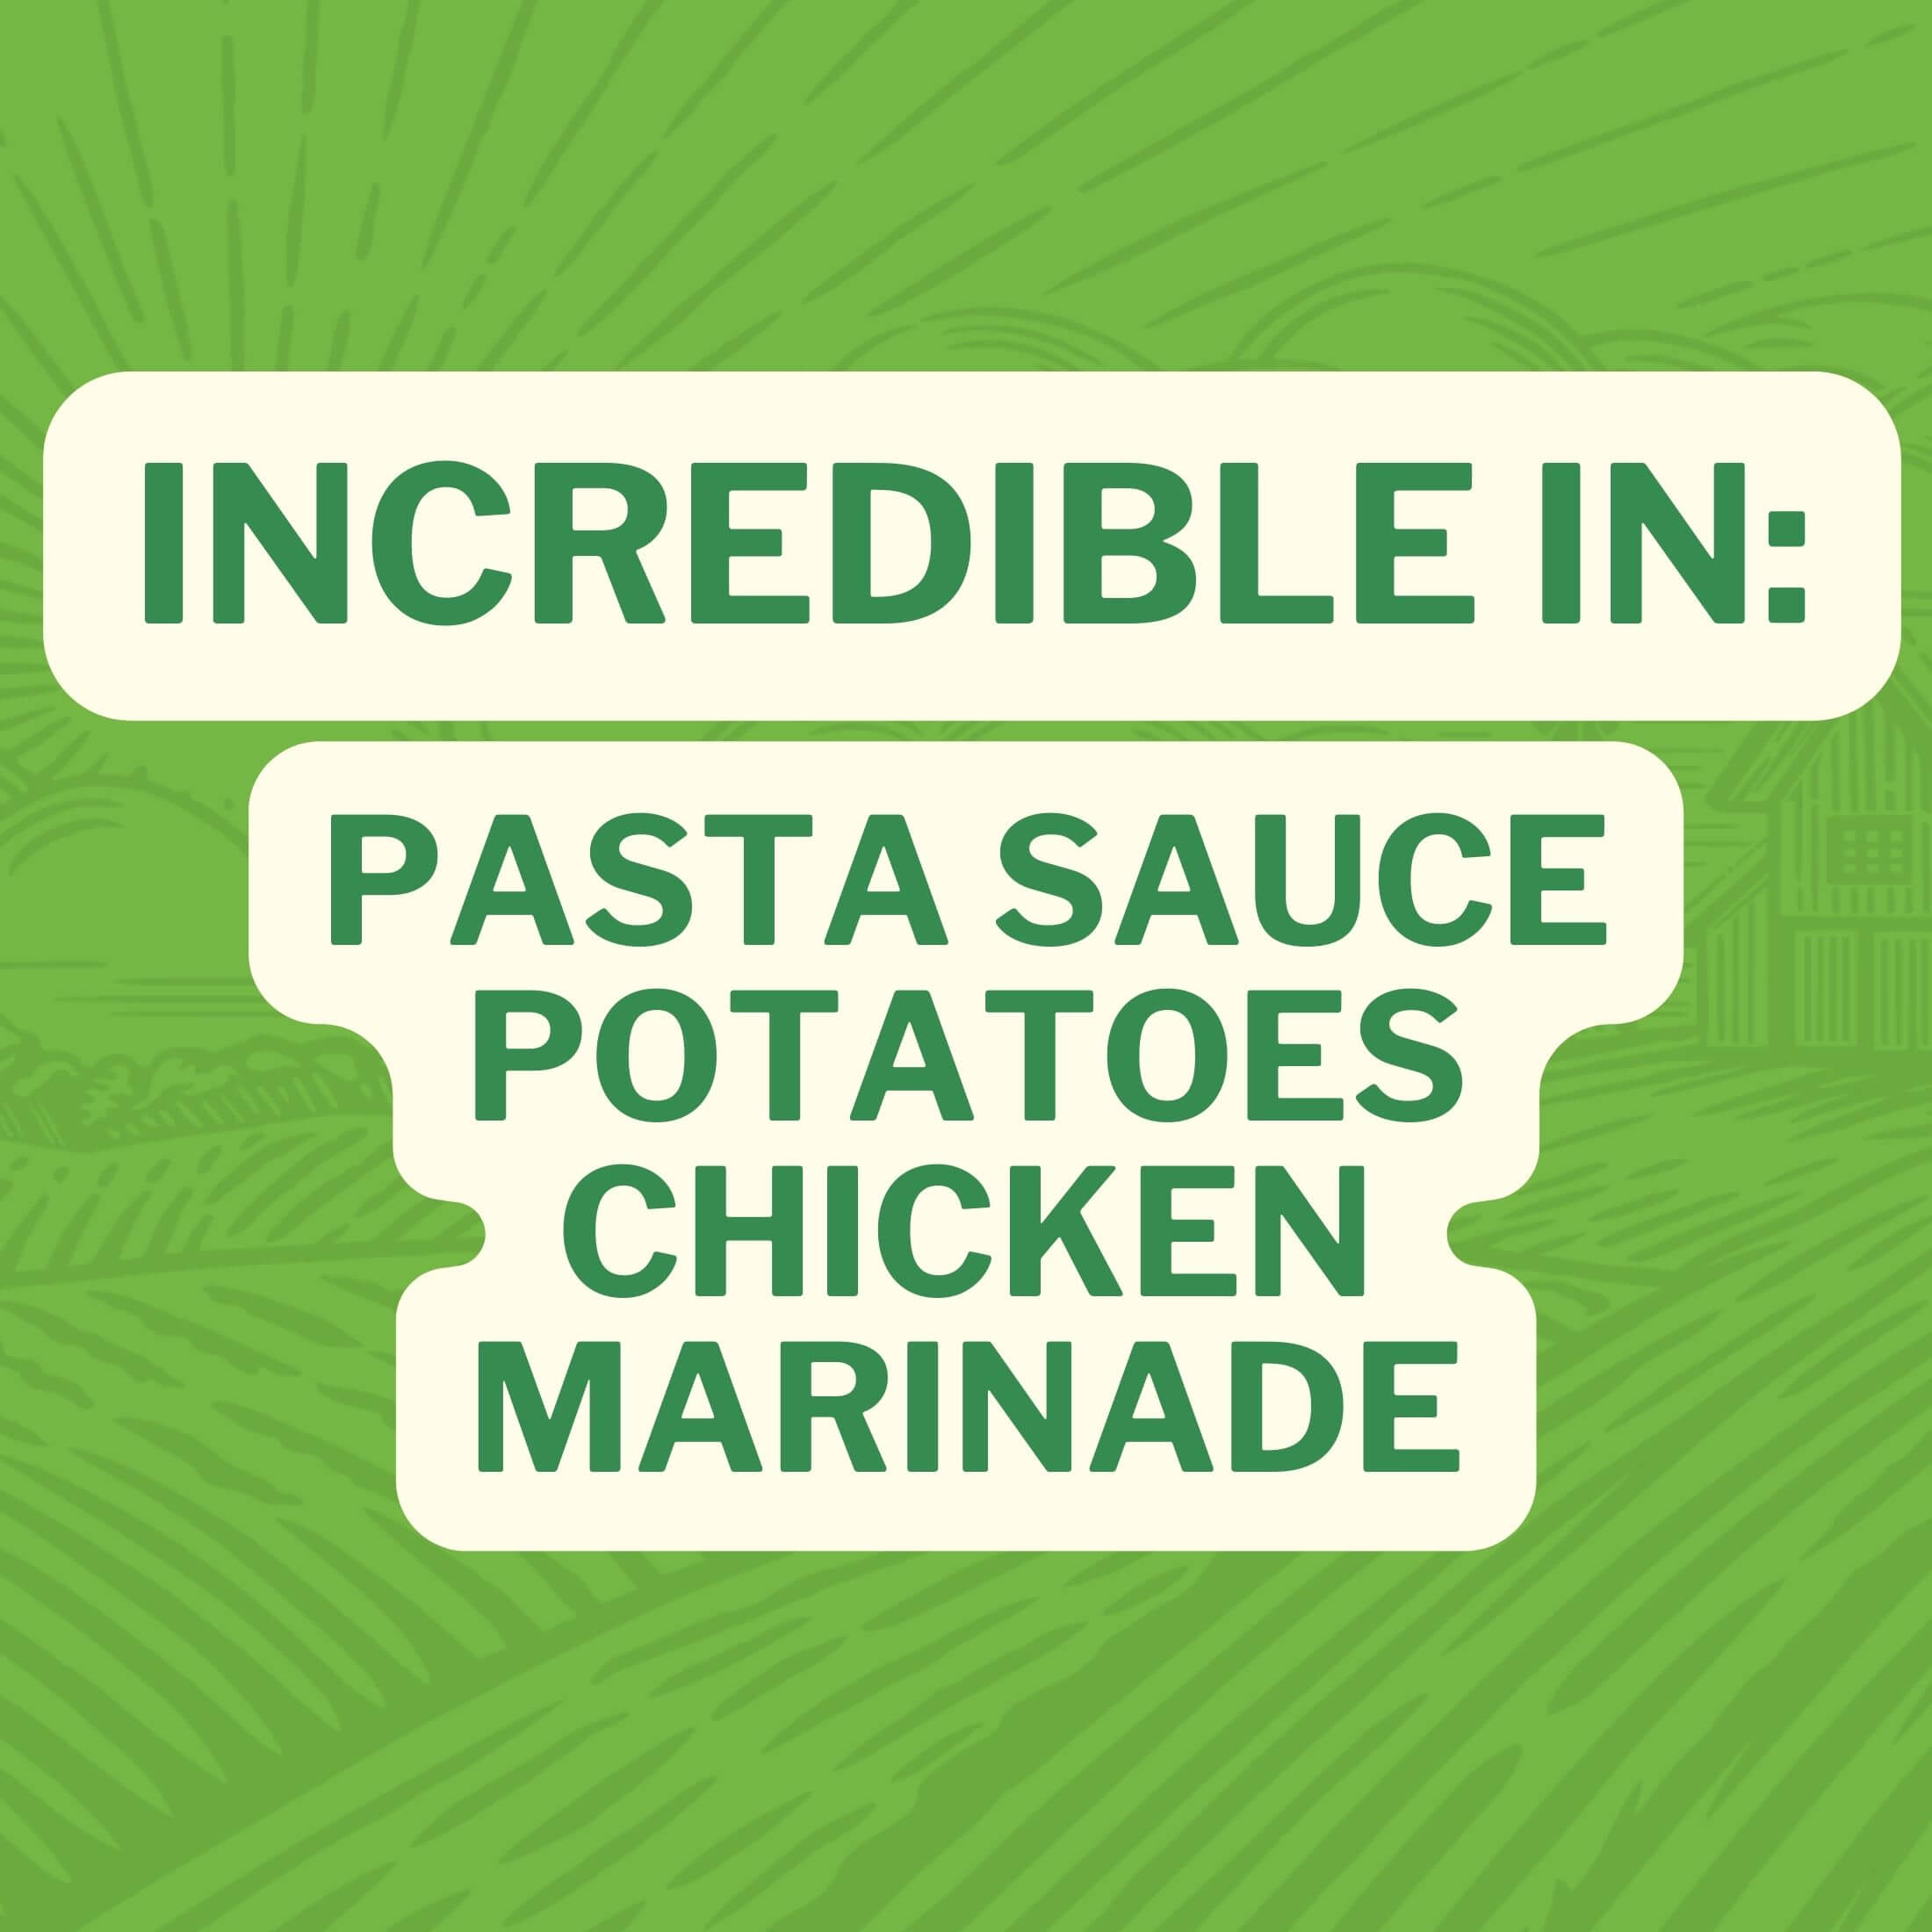 Incredible in: Pasta Sauce Potatoes Chicken Marinades